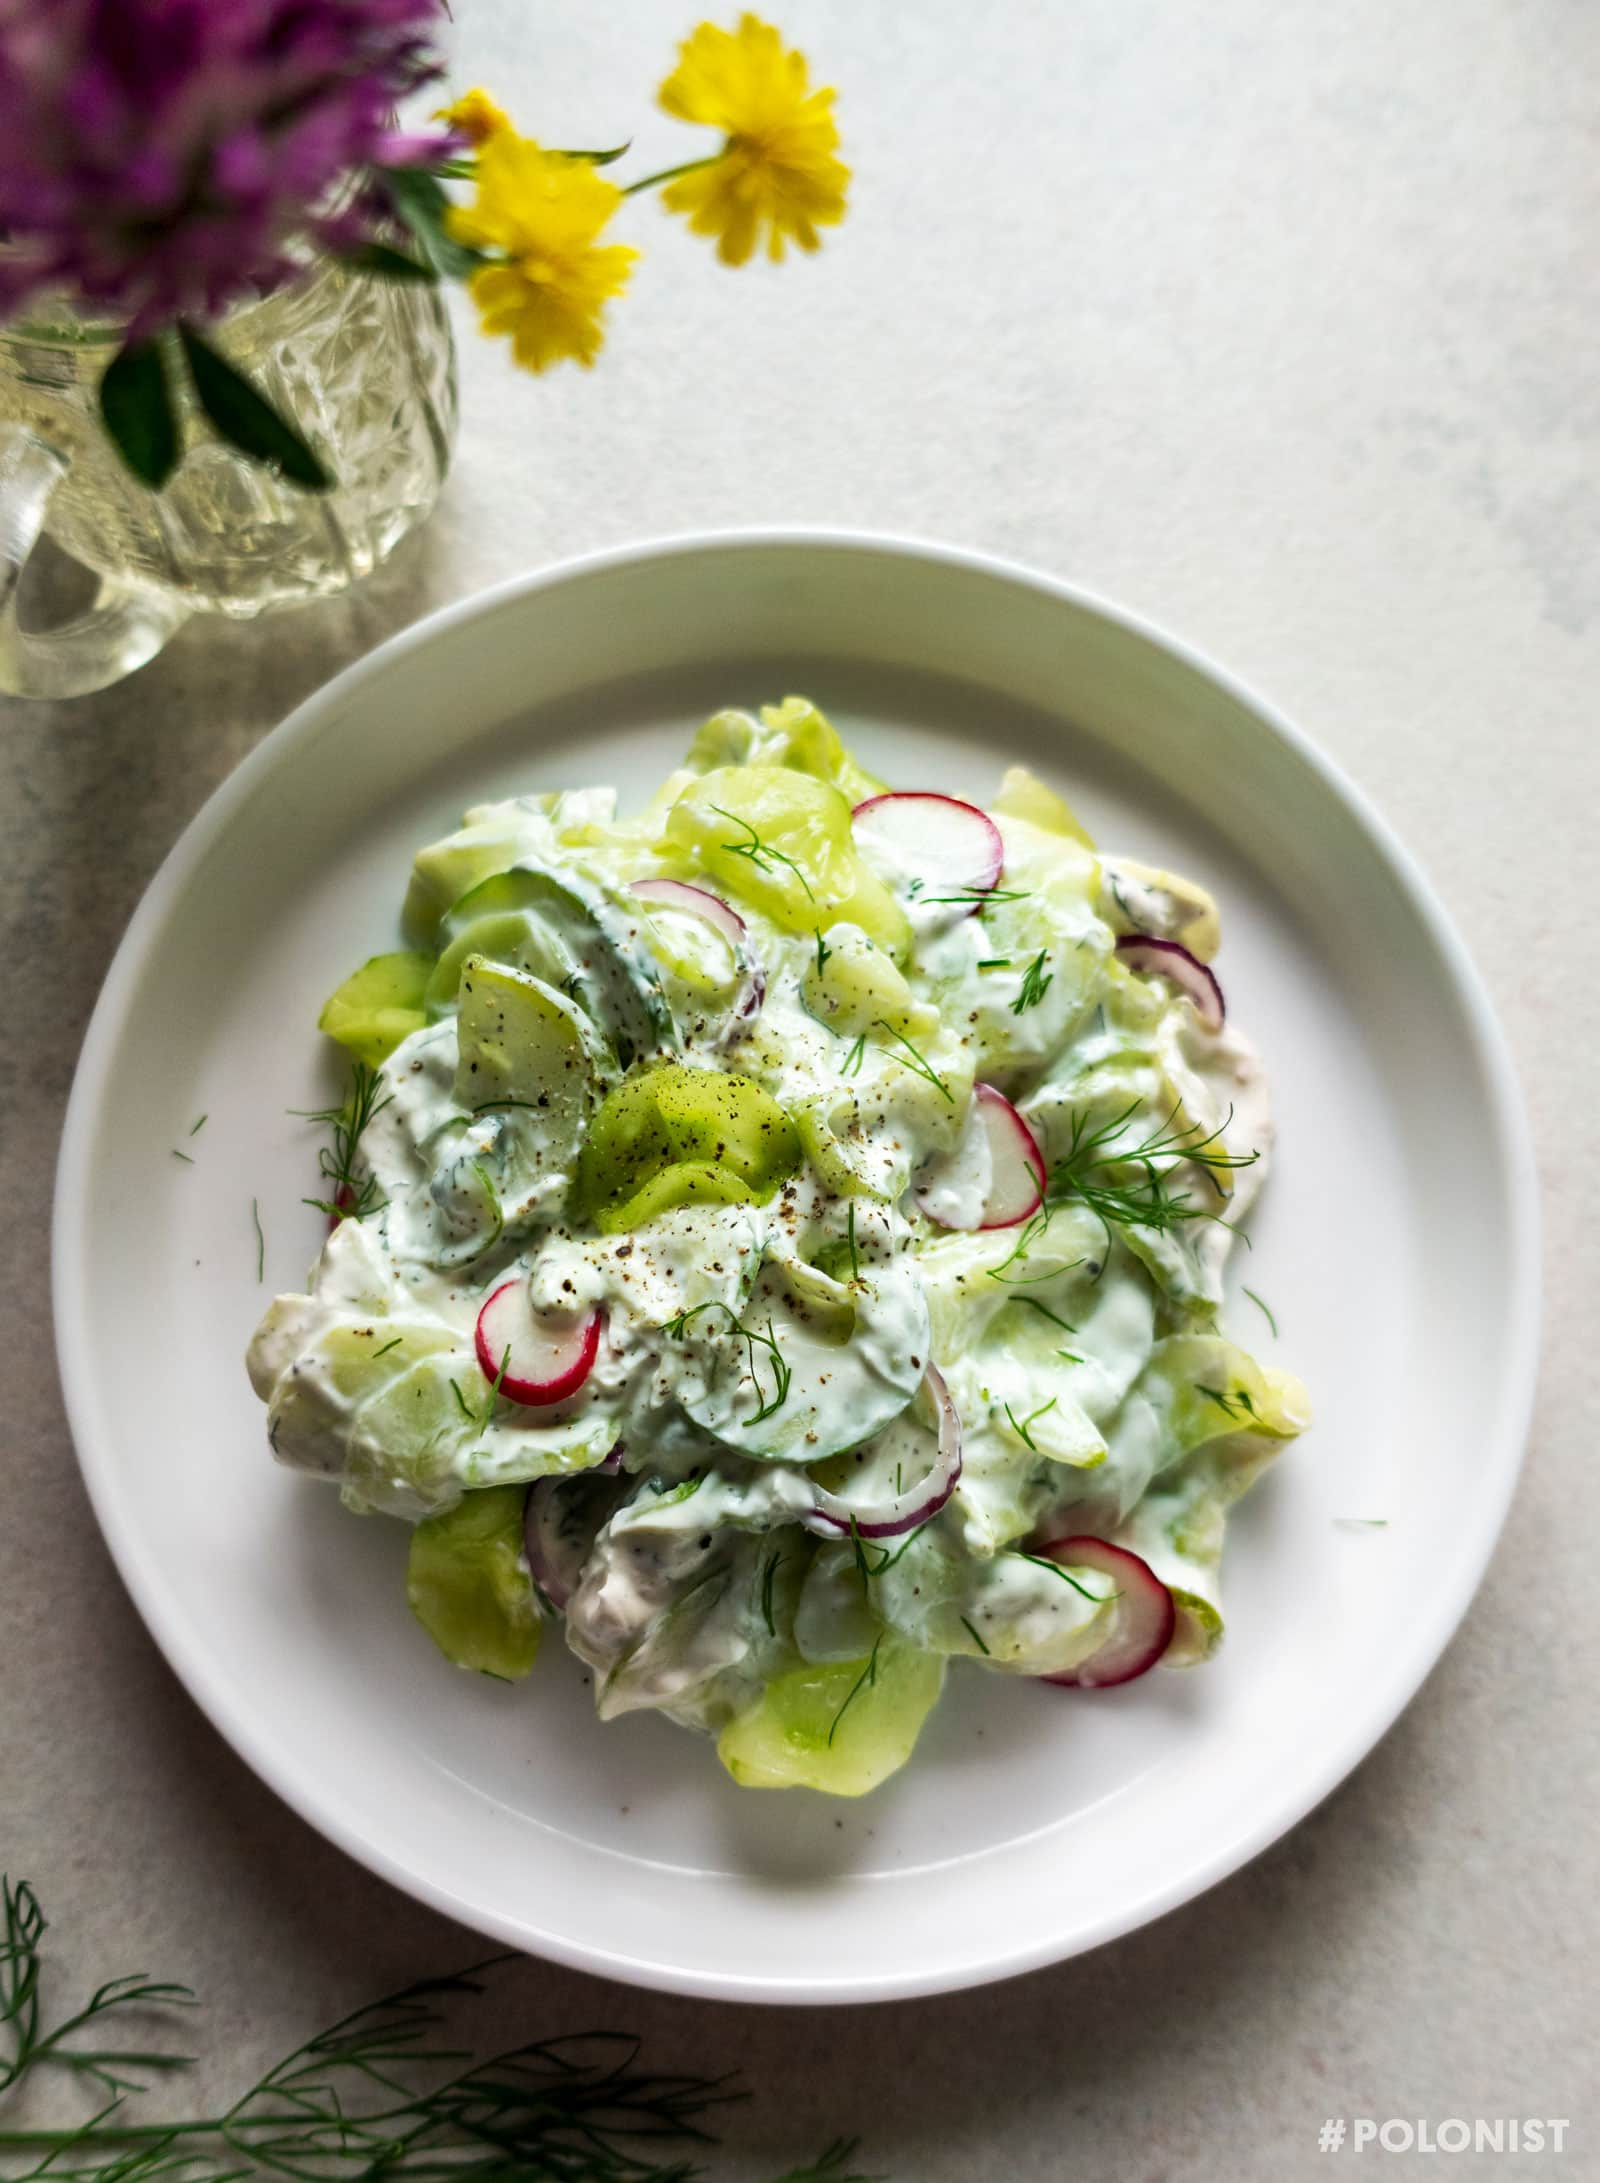 Mizeria - Polish-style Cucumber Salad with Sour Cream